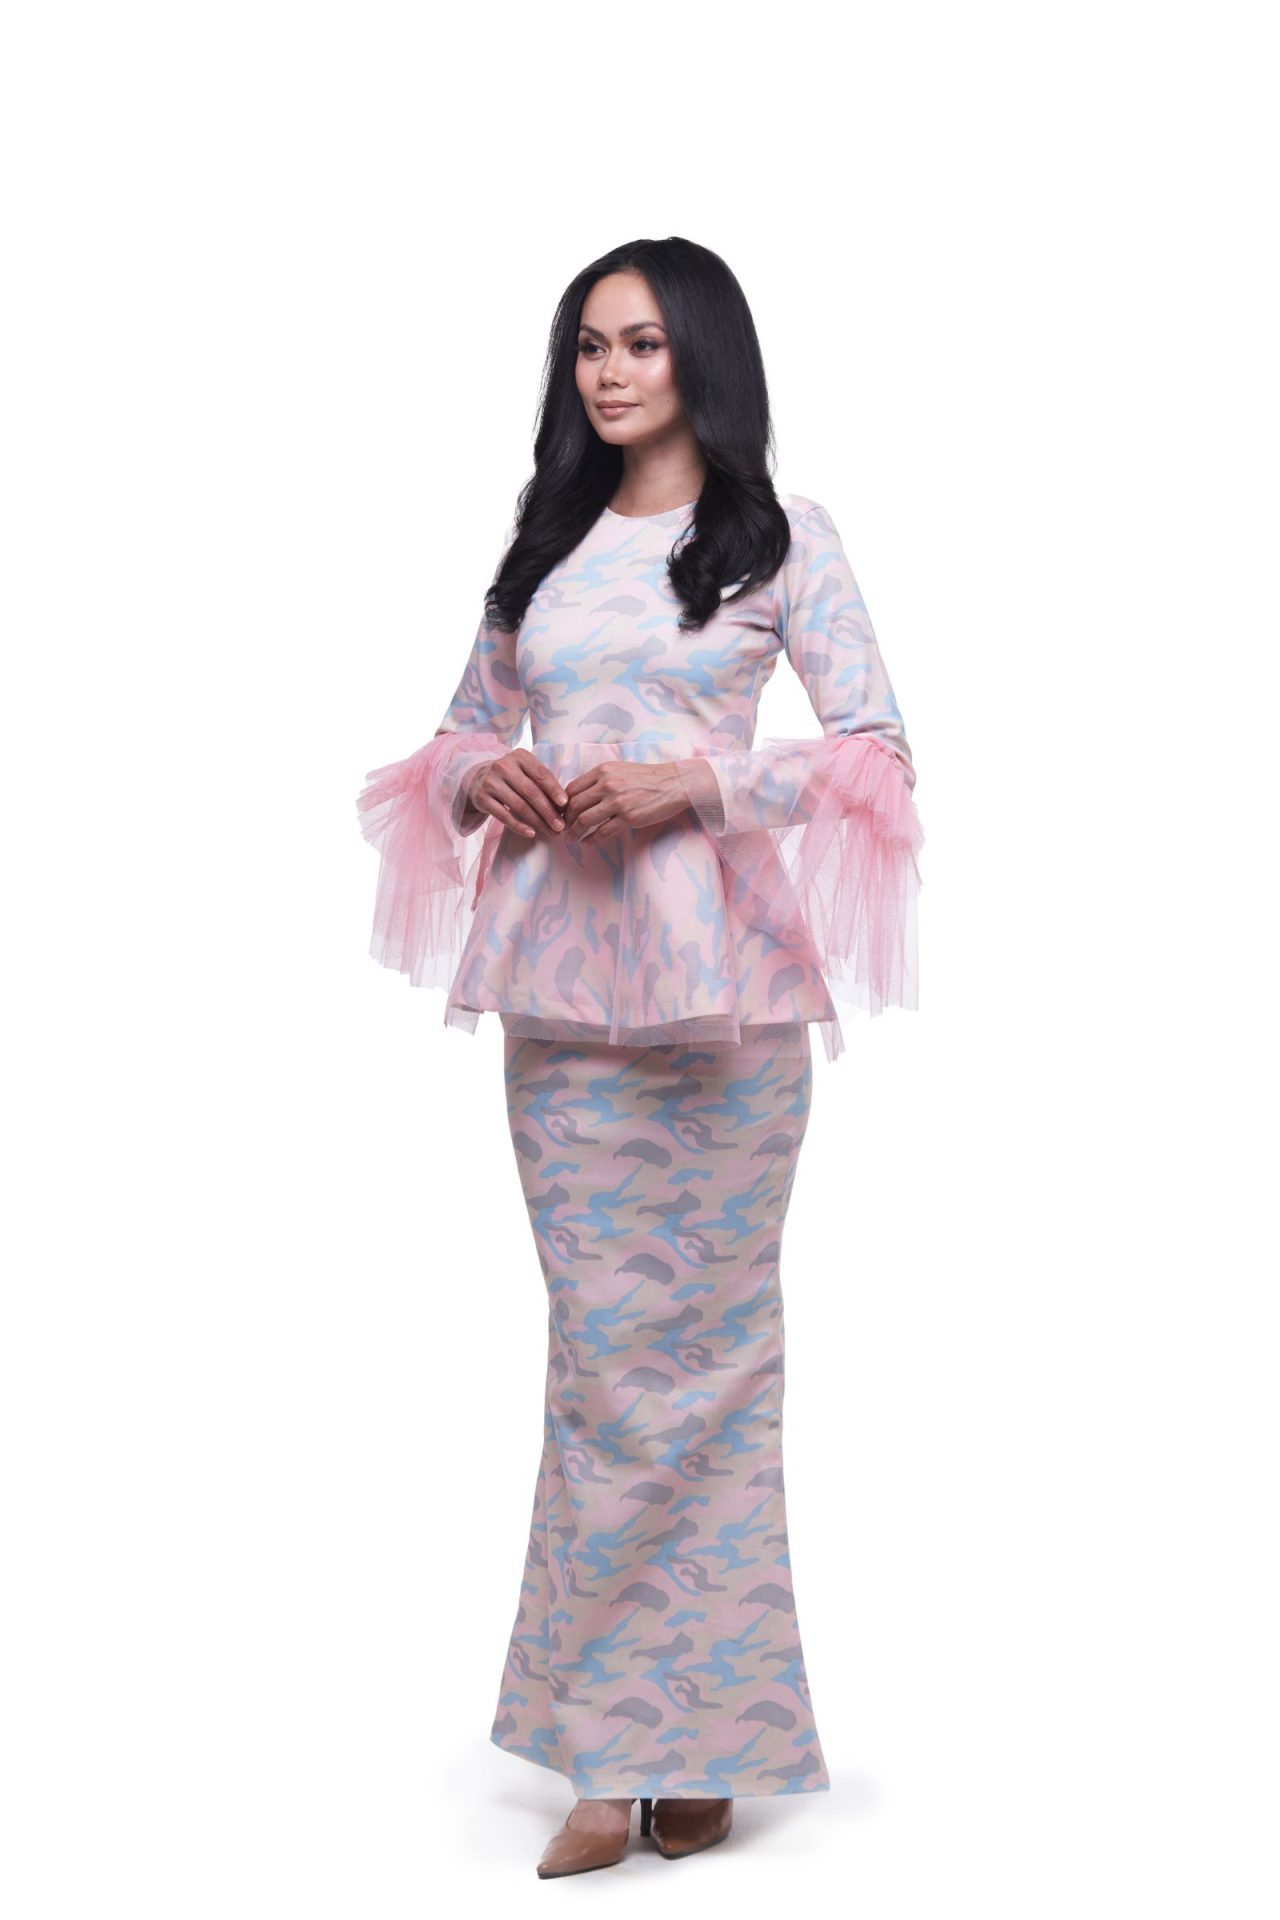 PUSPA | Mekkembang - Cotton Fashion Exclusive Boutique